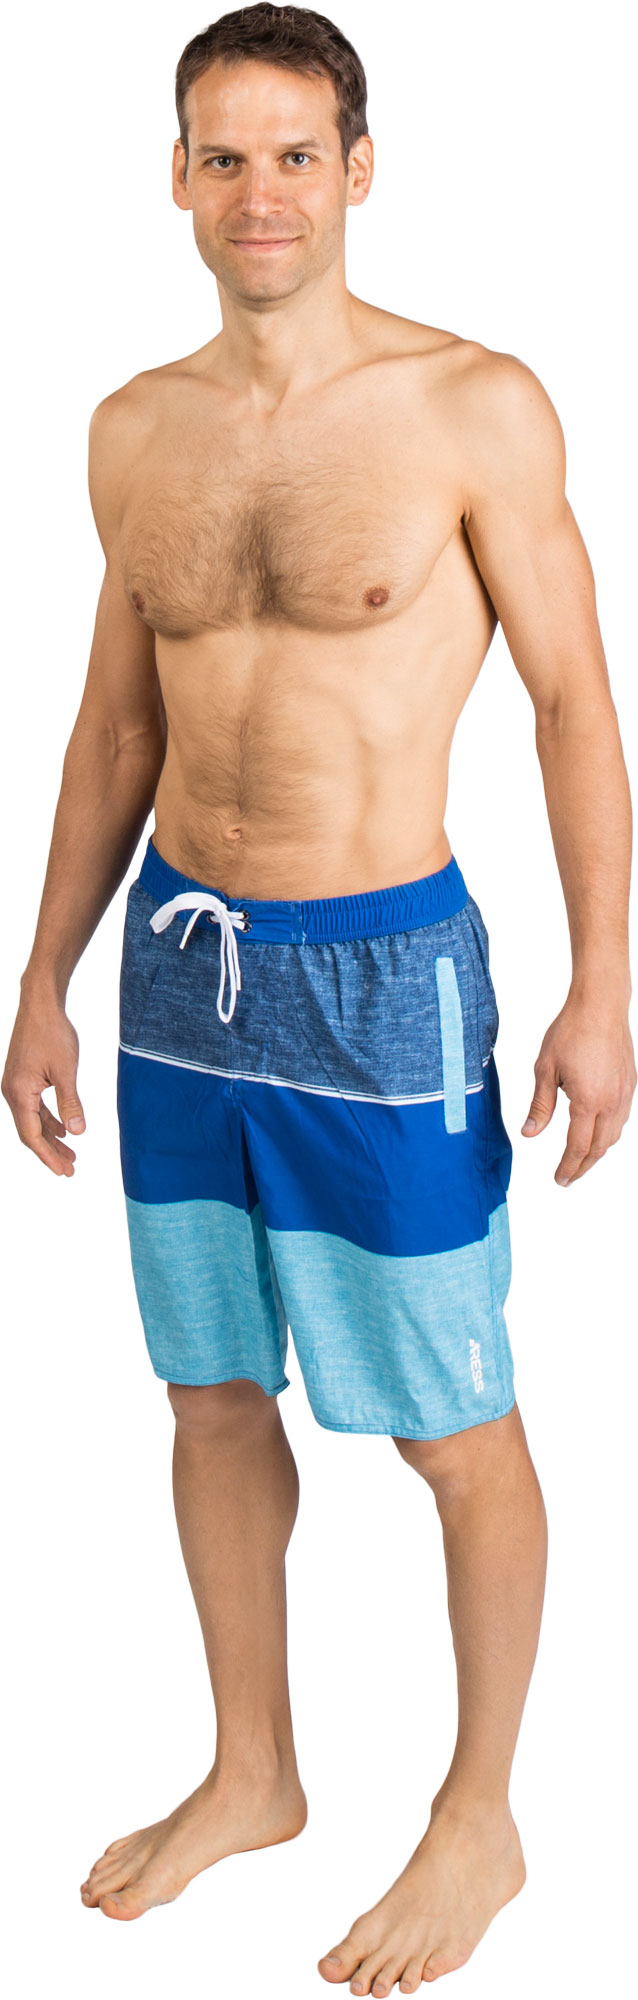 Men’s swimming shorts